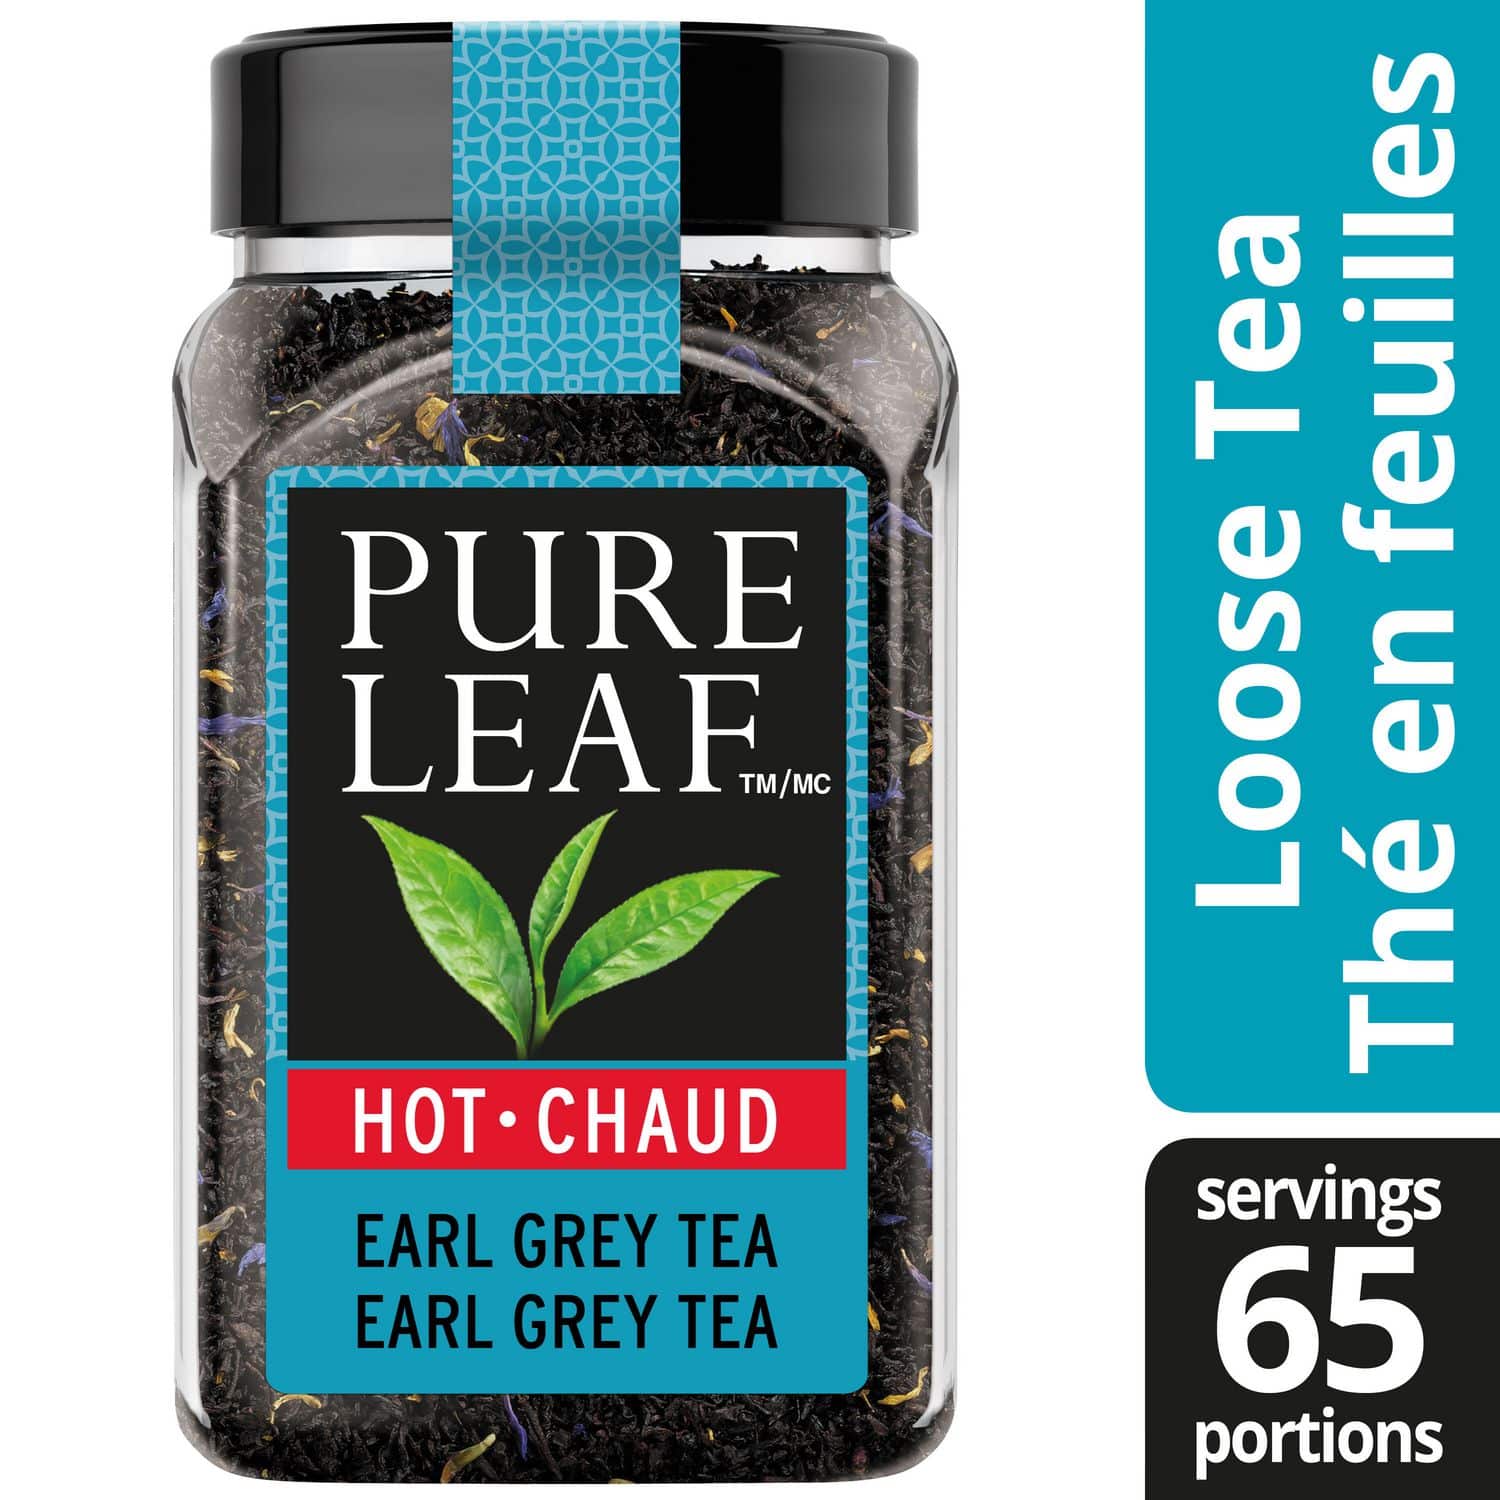 Pure Leaf Loose Leaf Tea Earl Grey 125g